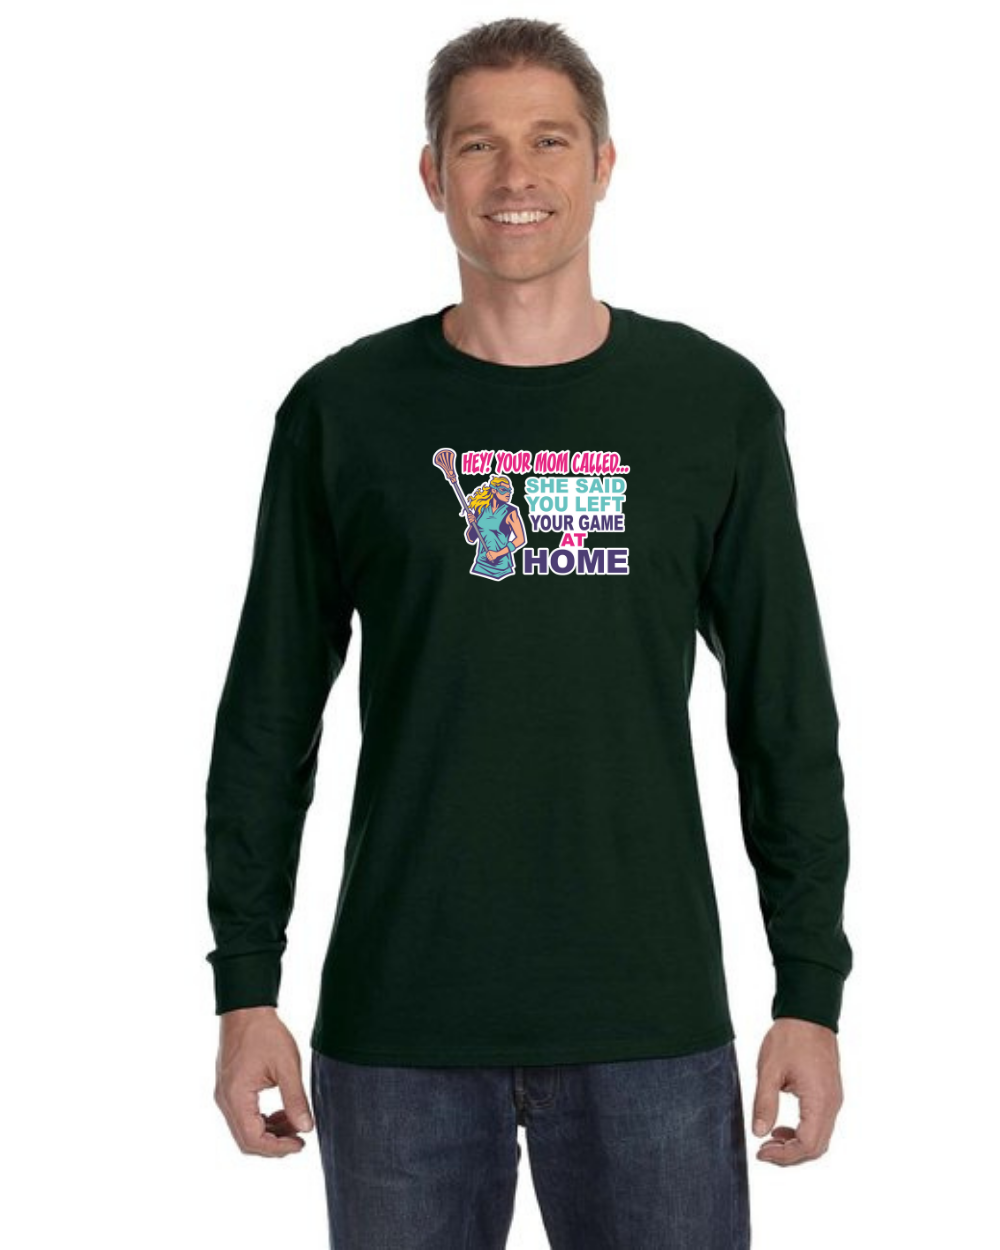 fashionable cotton crew neck clothing Long sleeve T-shirt tee shirt tie dye apparel